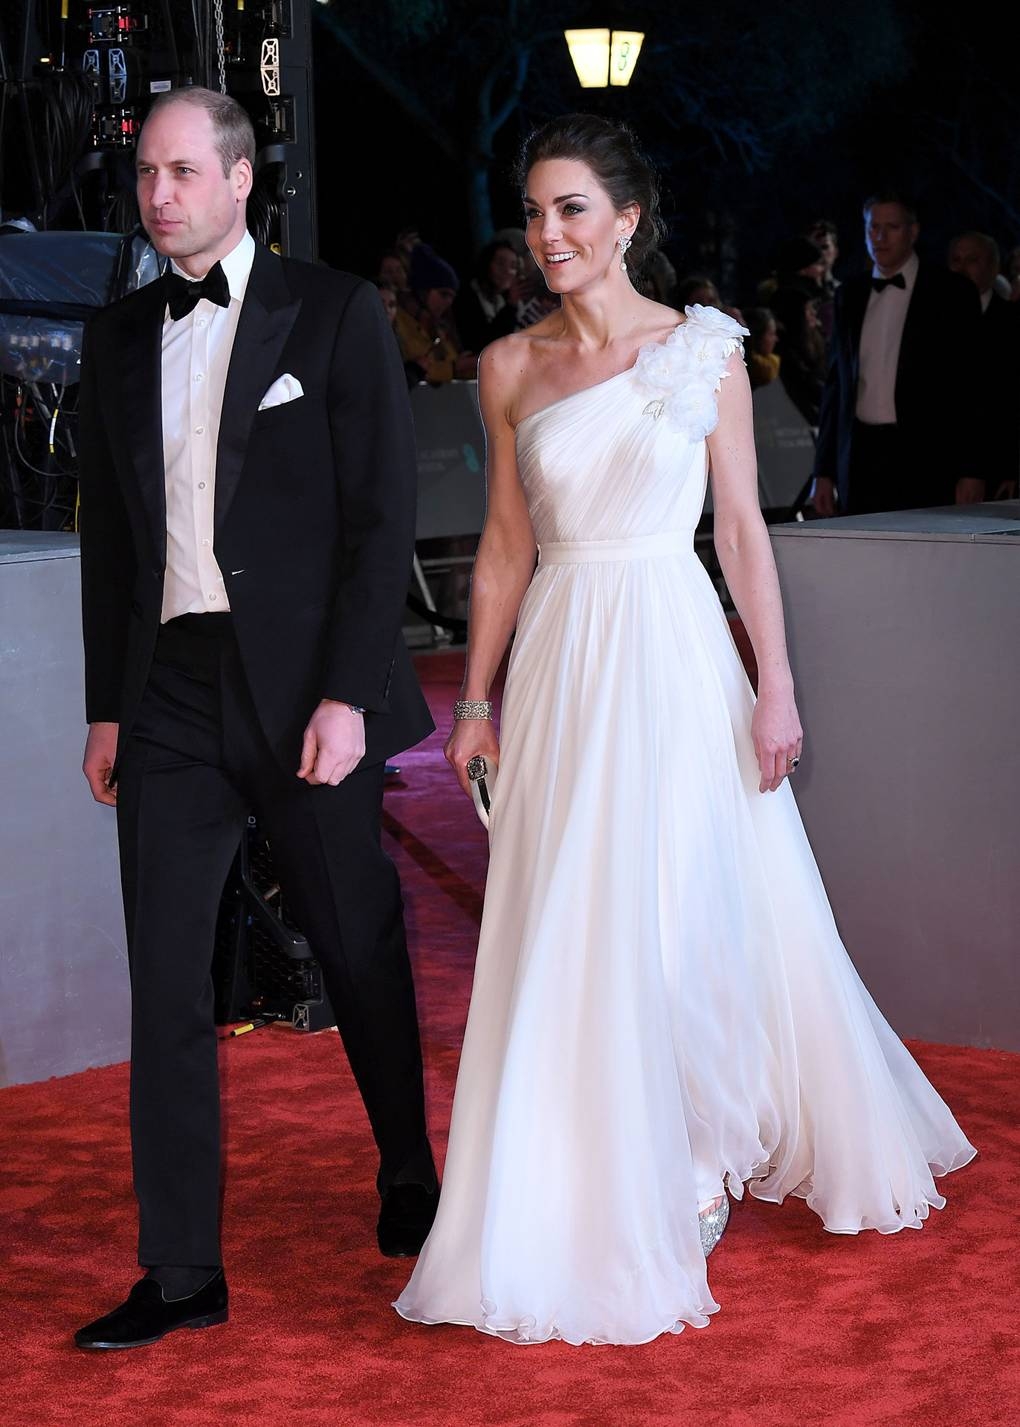 BAFTAs 2019: Red Carpet Dresses